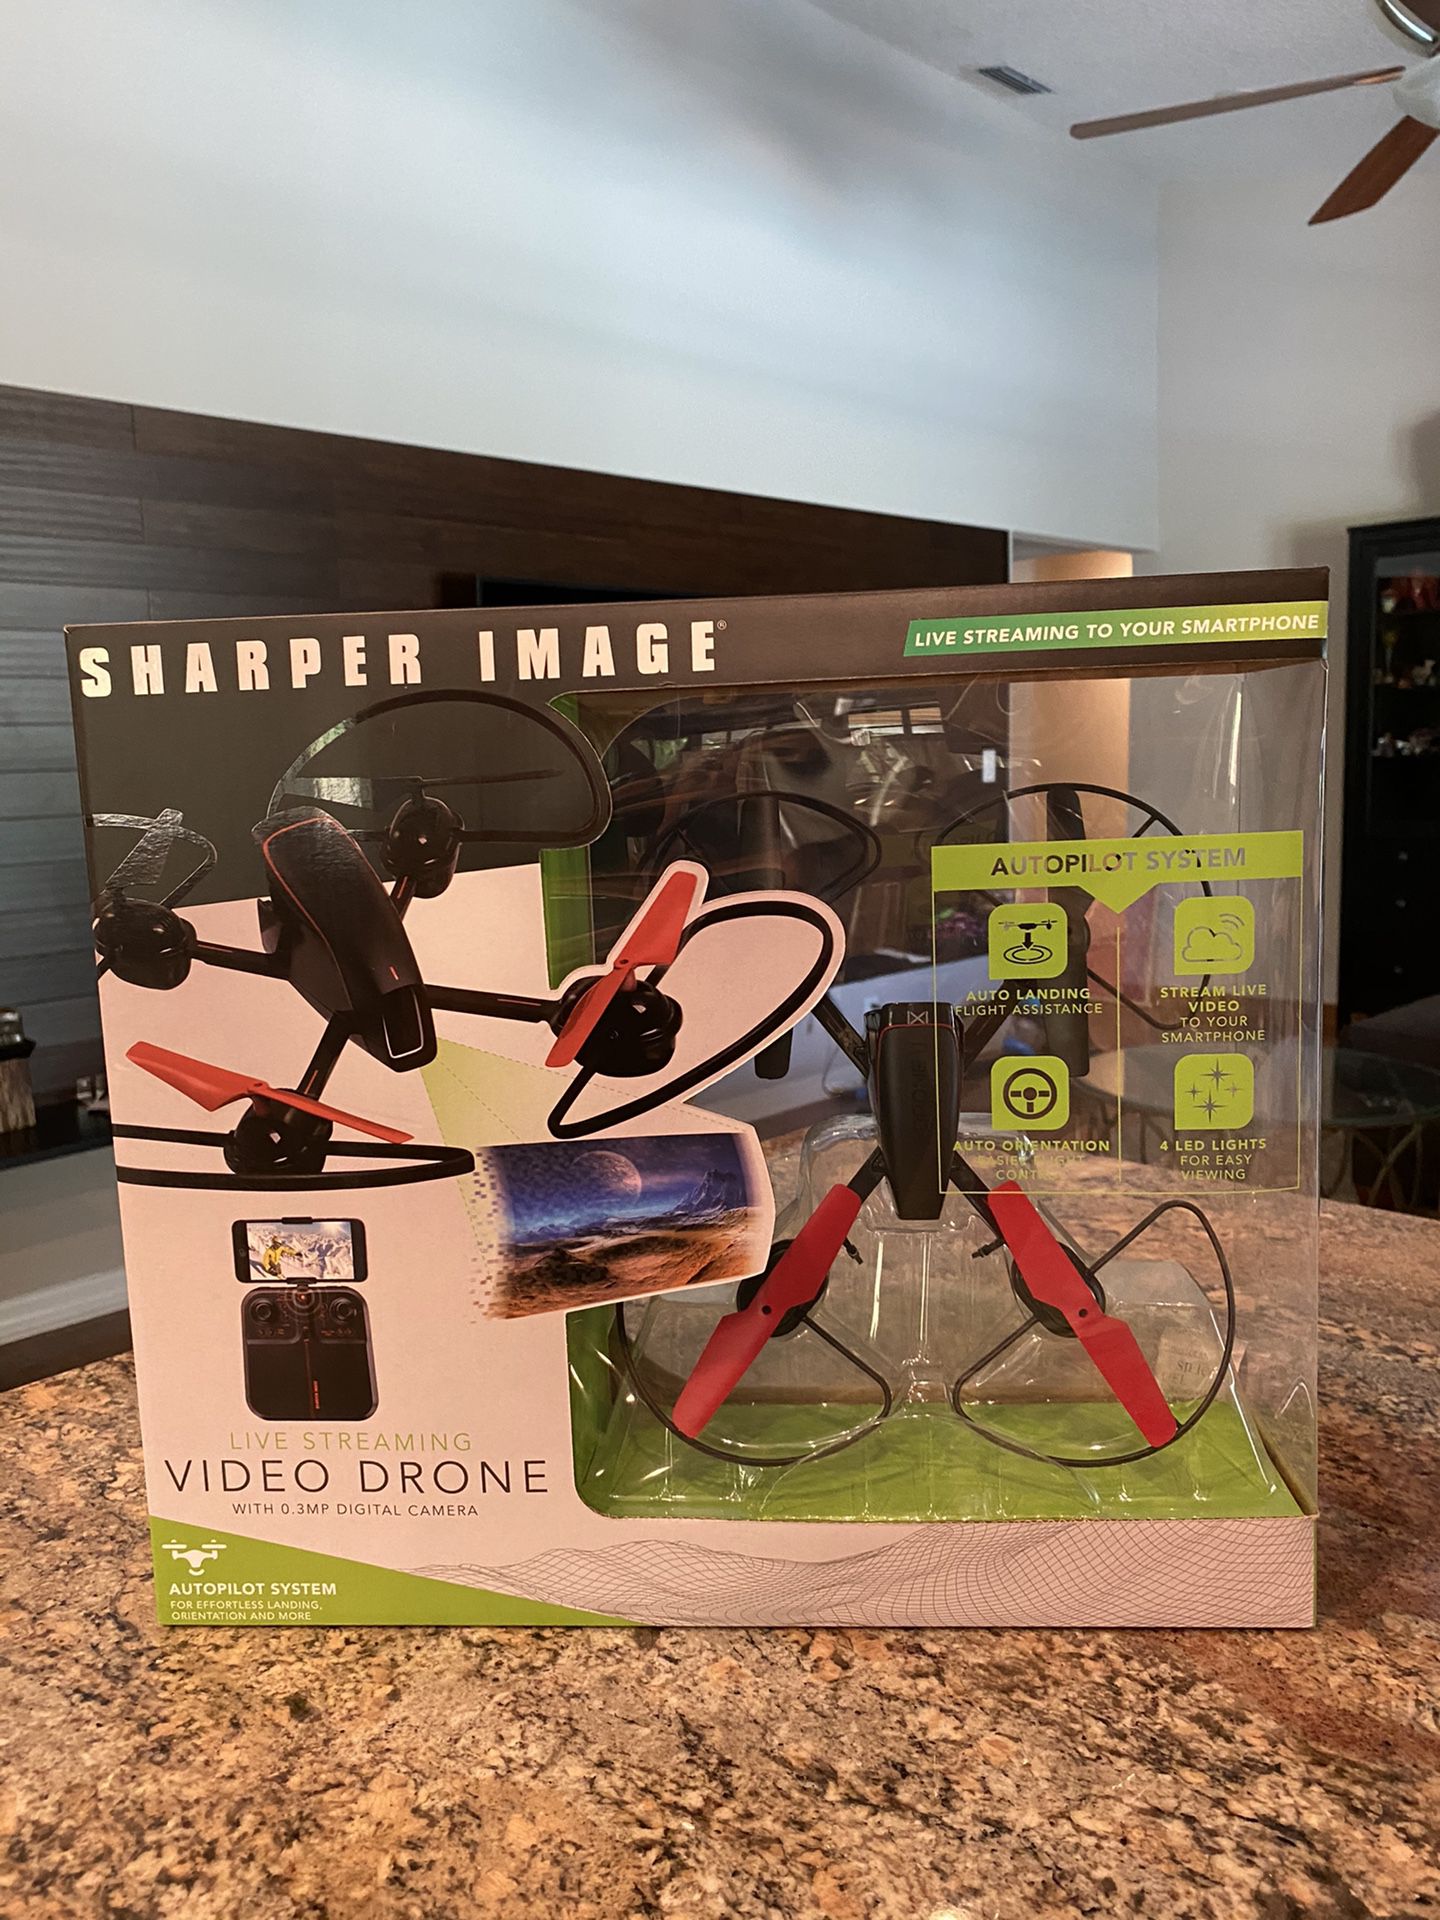 Sharper Image Master Video Drone